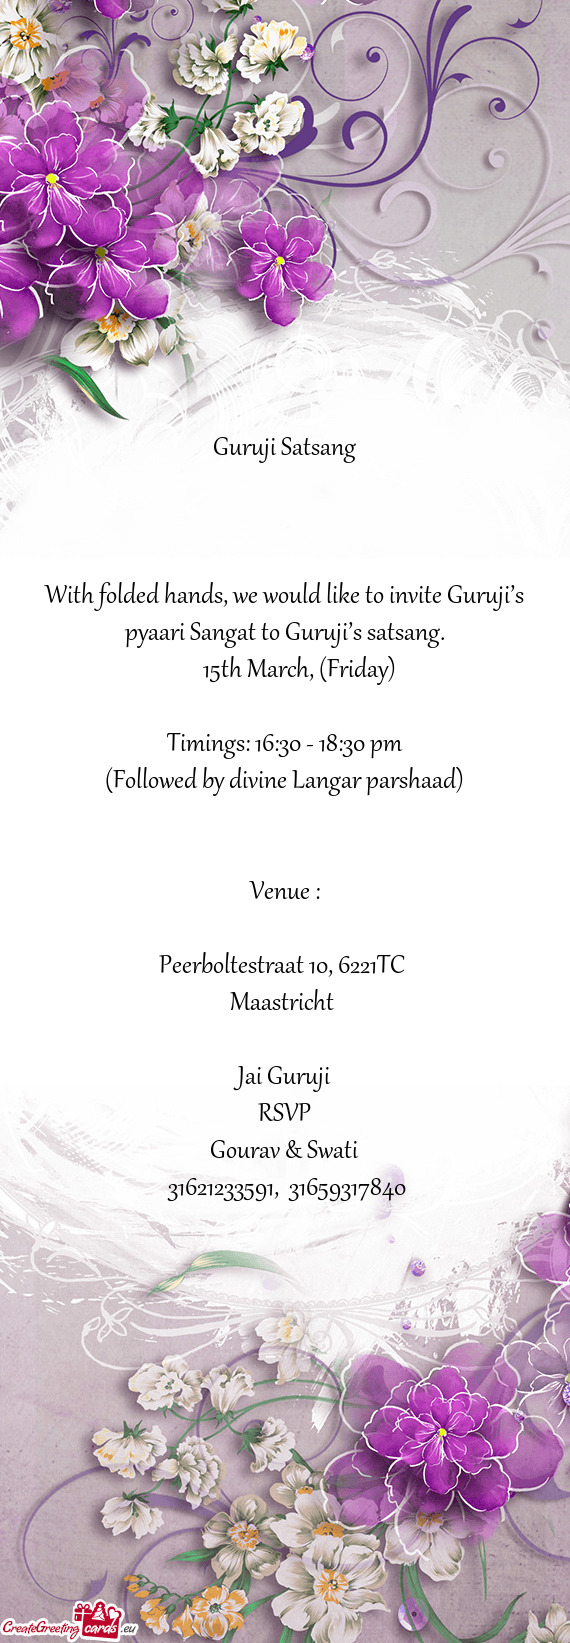 With folded hands, we would like to invite Guruji’s pyaari Sangat to Guruji’s satsang